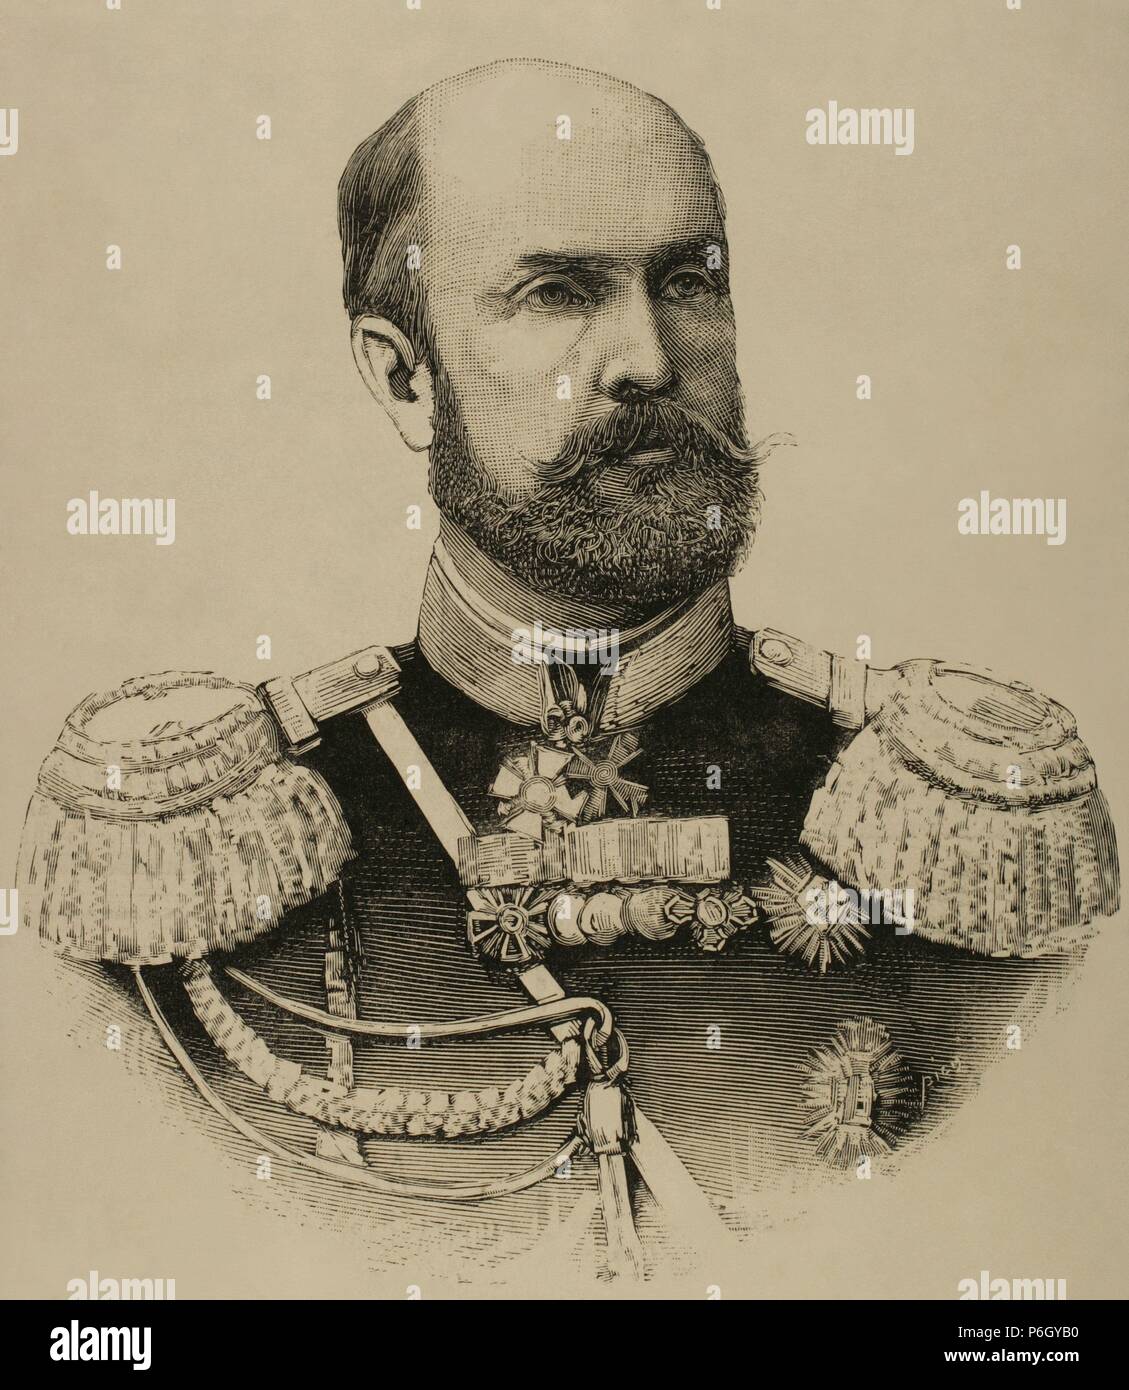 Nikolai Wassiljewitsch baron of Kaulbars (1842-1905). General of the Russian army and military writer. Engraving. La Ilustracion Espanola, 1886. Stock Photo